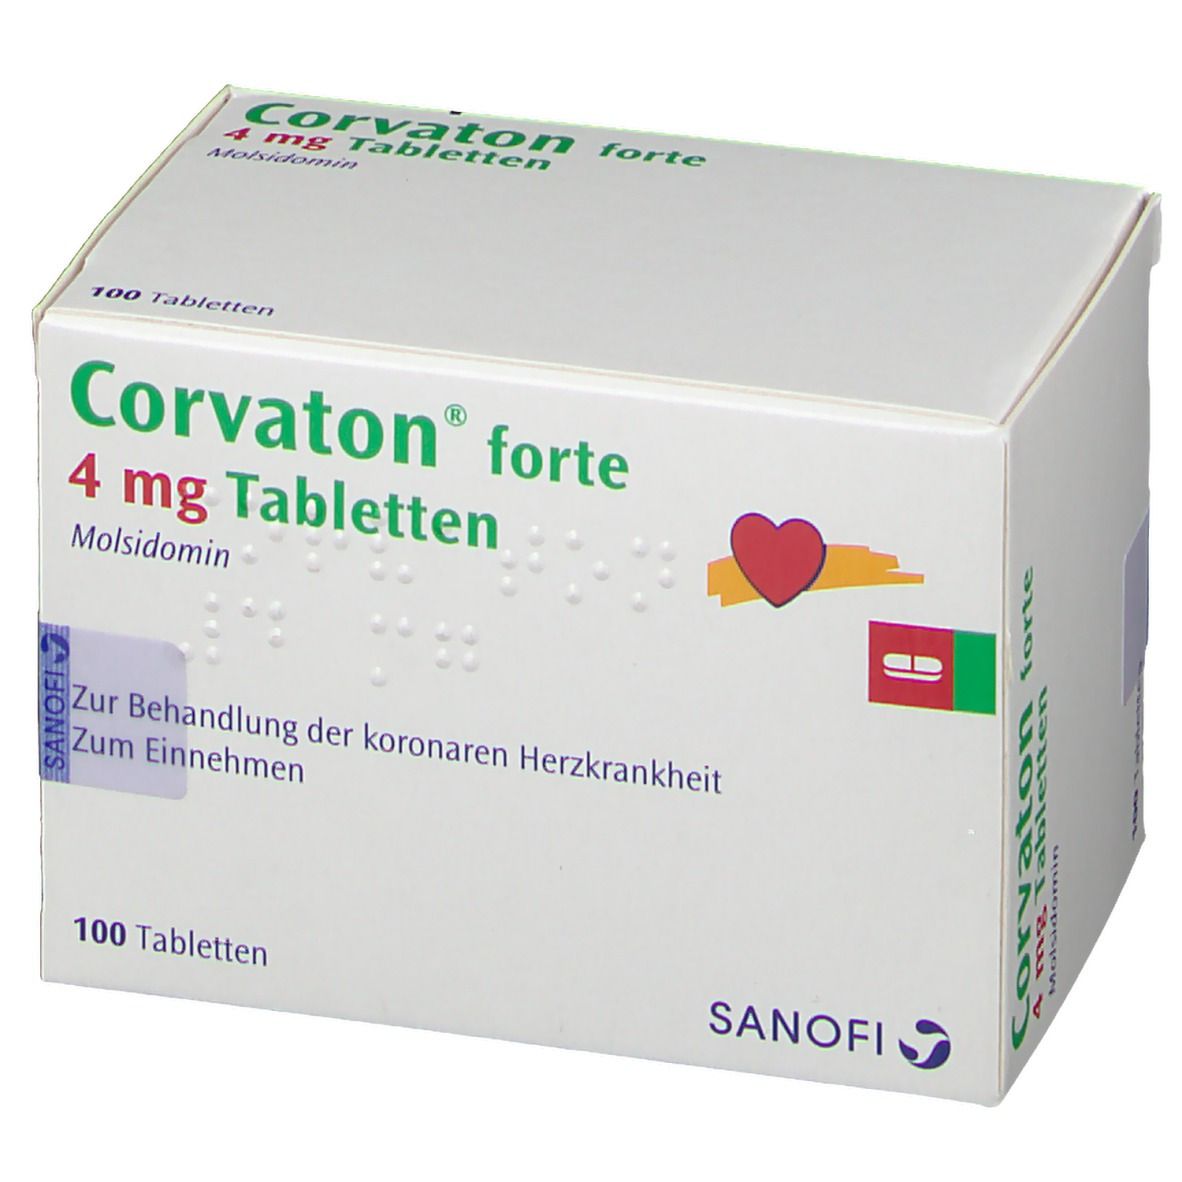 Corvaton® forte 4 mg